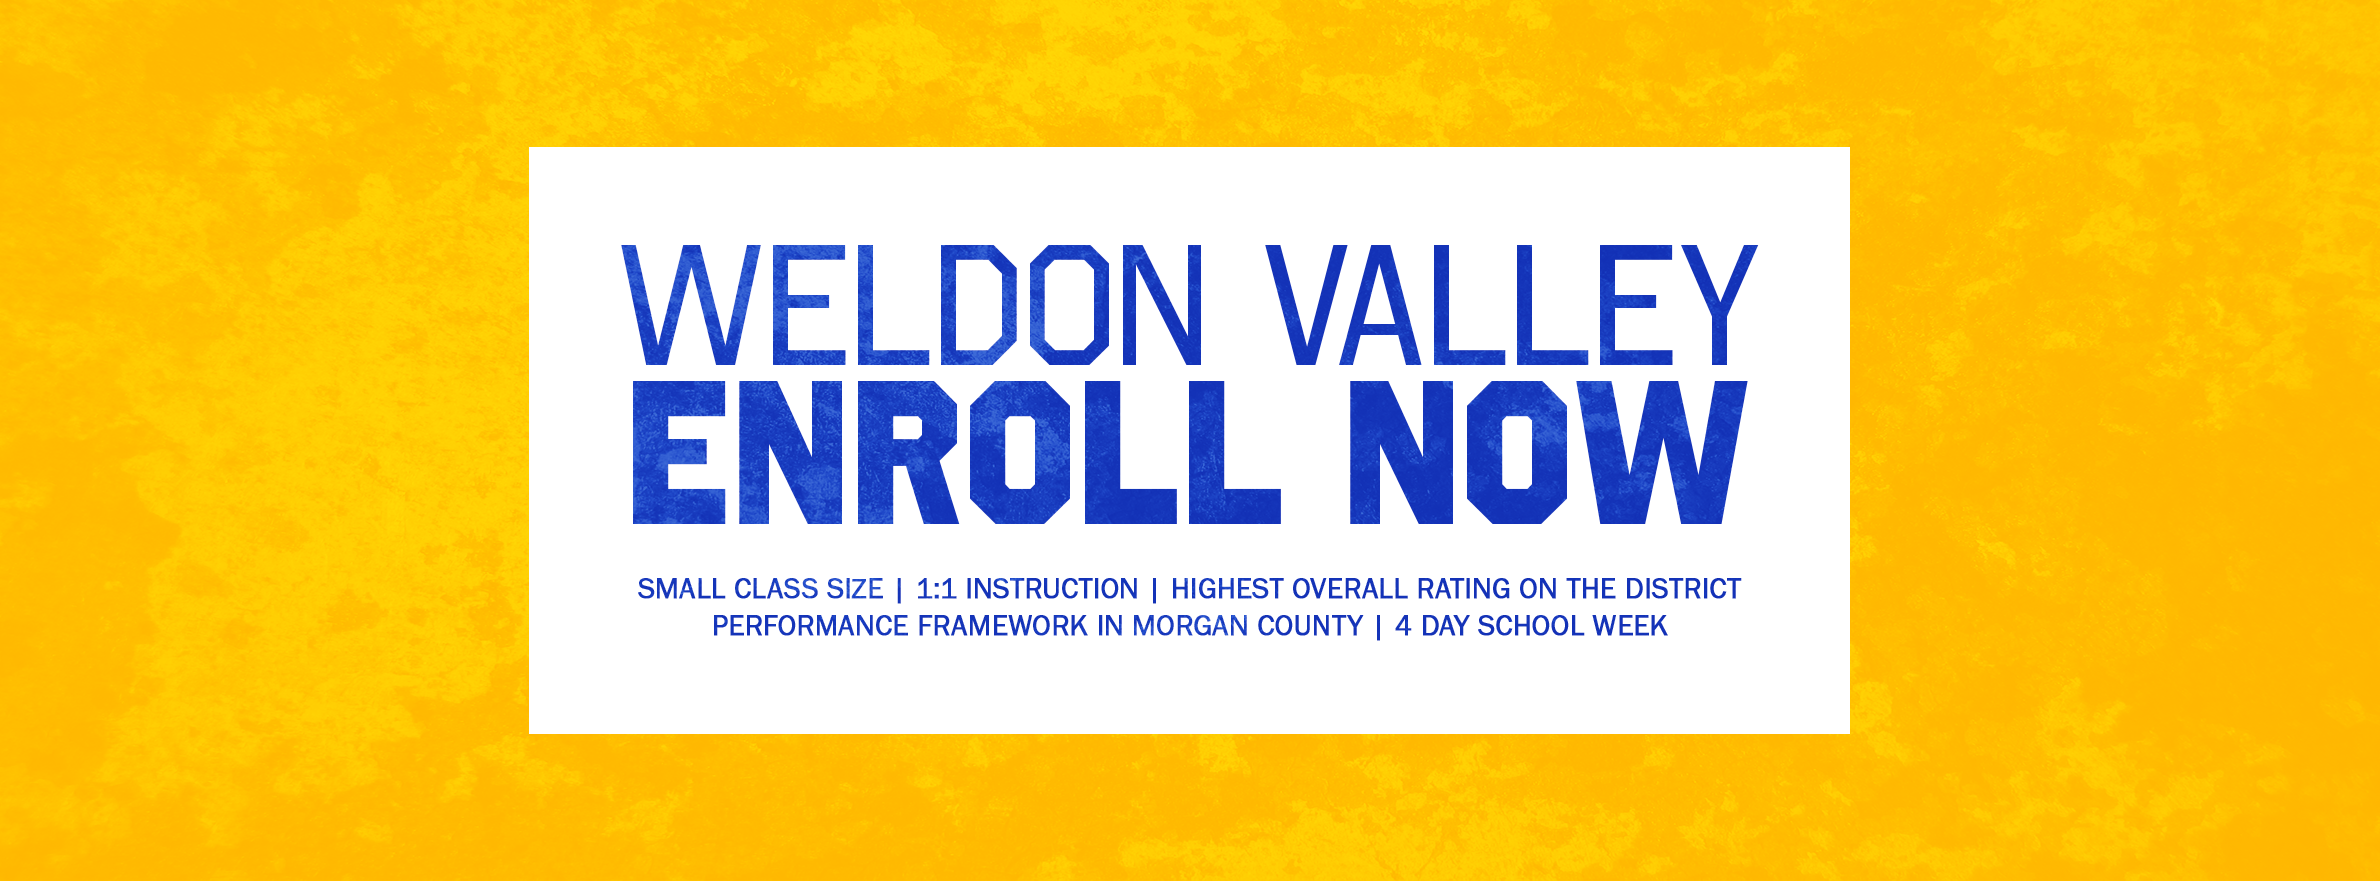 weldon valley enroll now